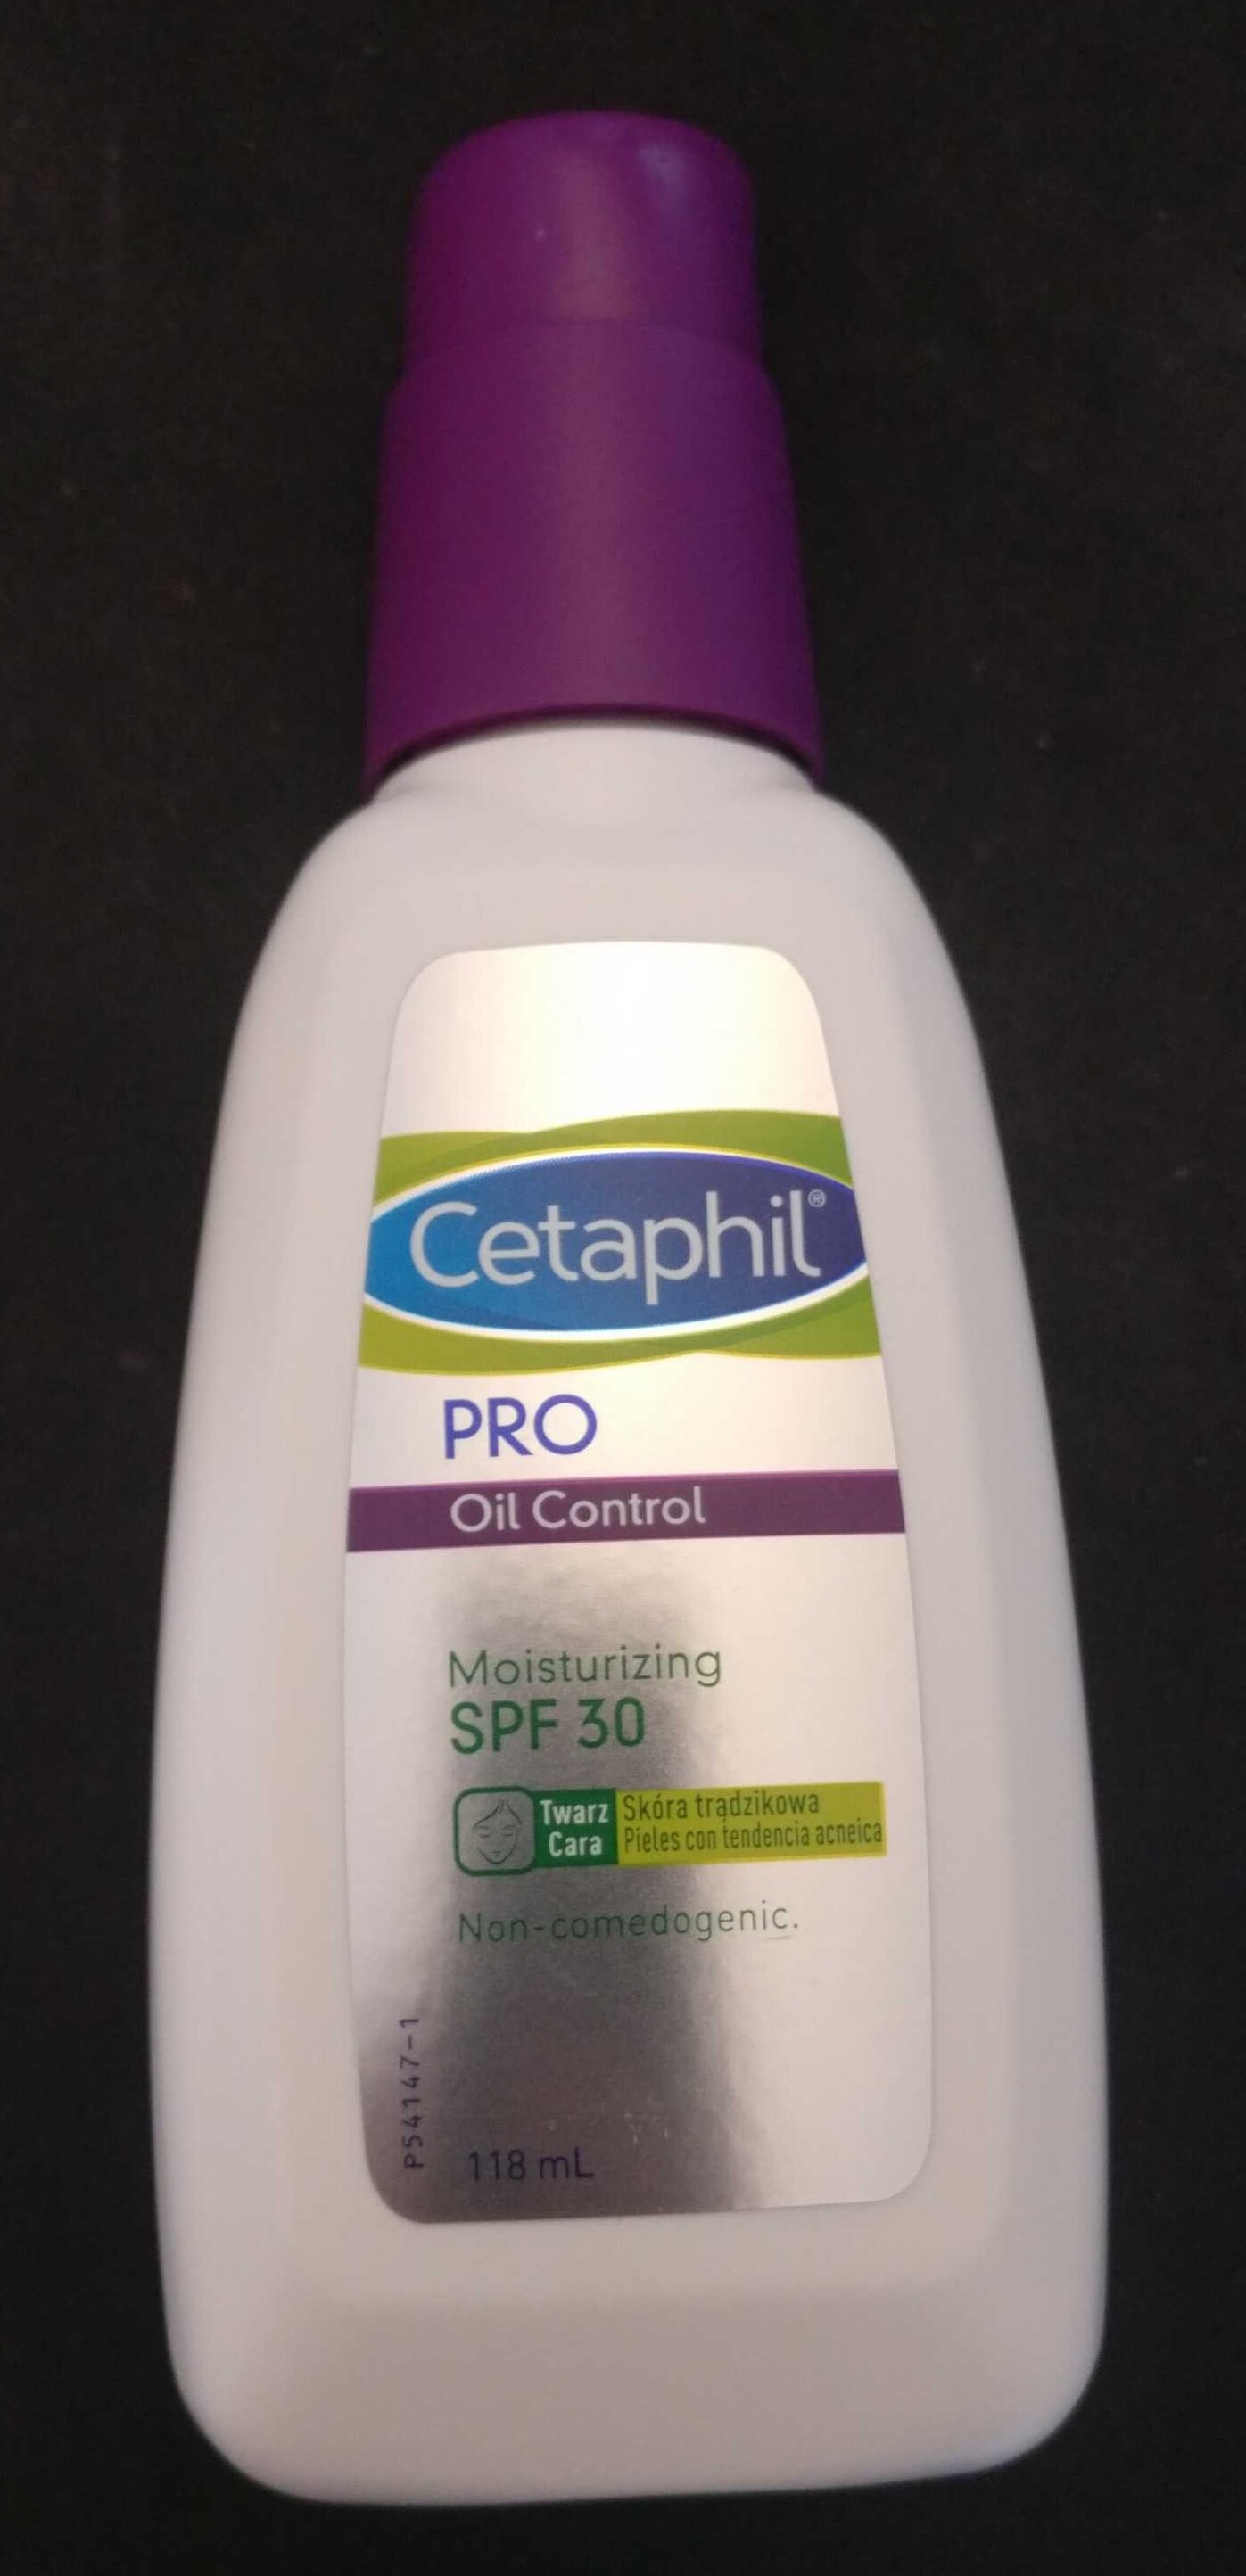 Cetaphil PRO Oil Control Moisturizer with SPF 30 - Product - en